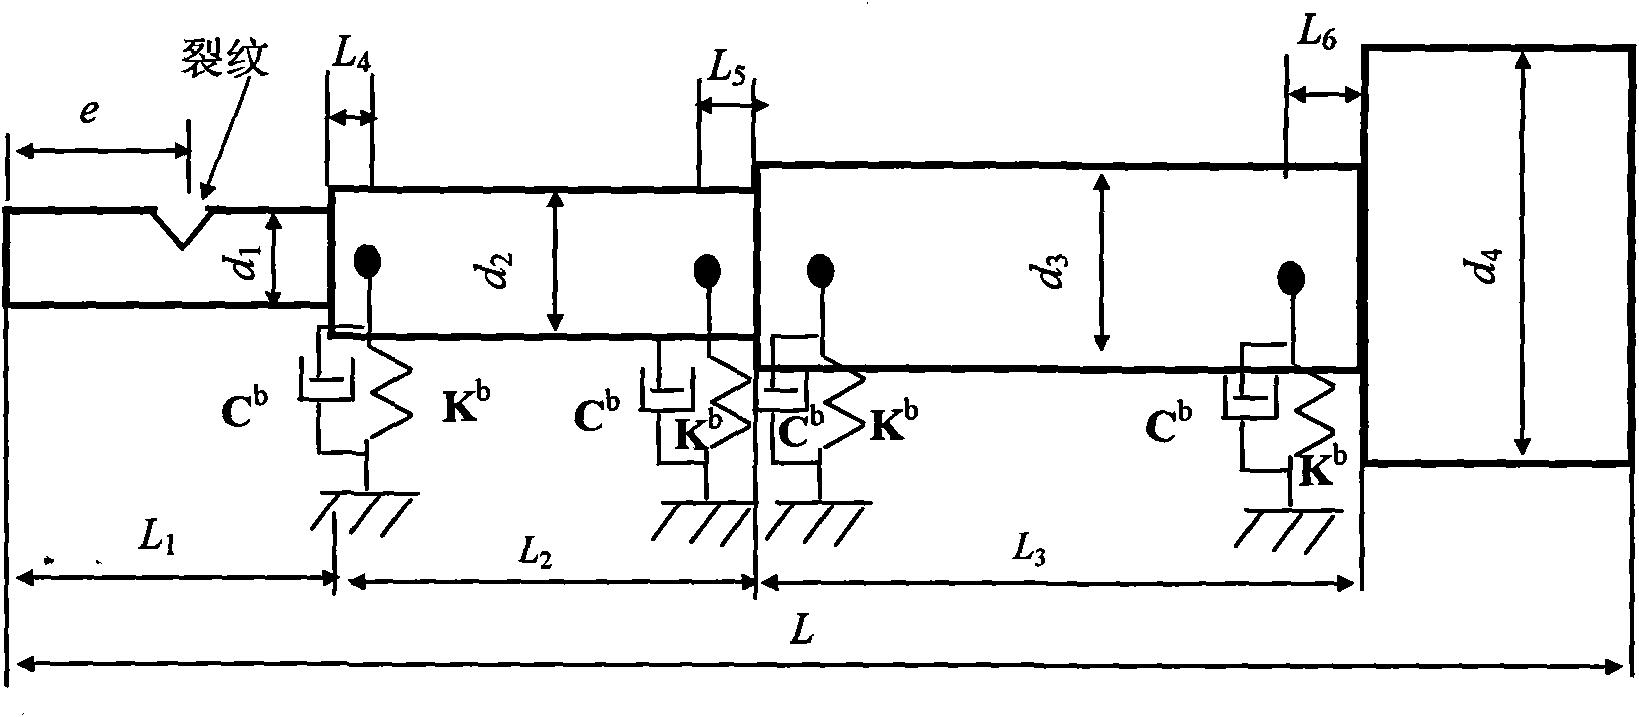 Crack identification method of main shaft of boring machine